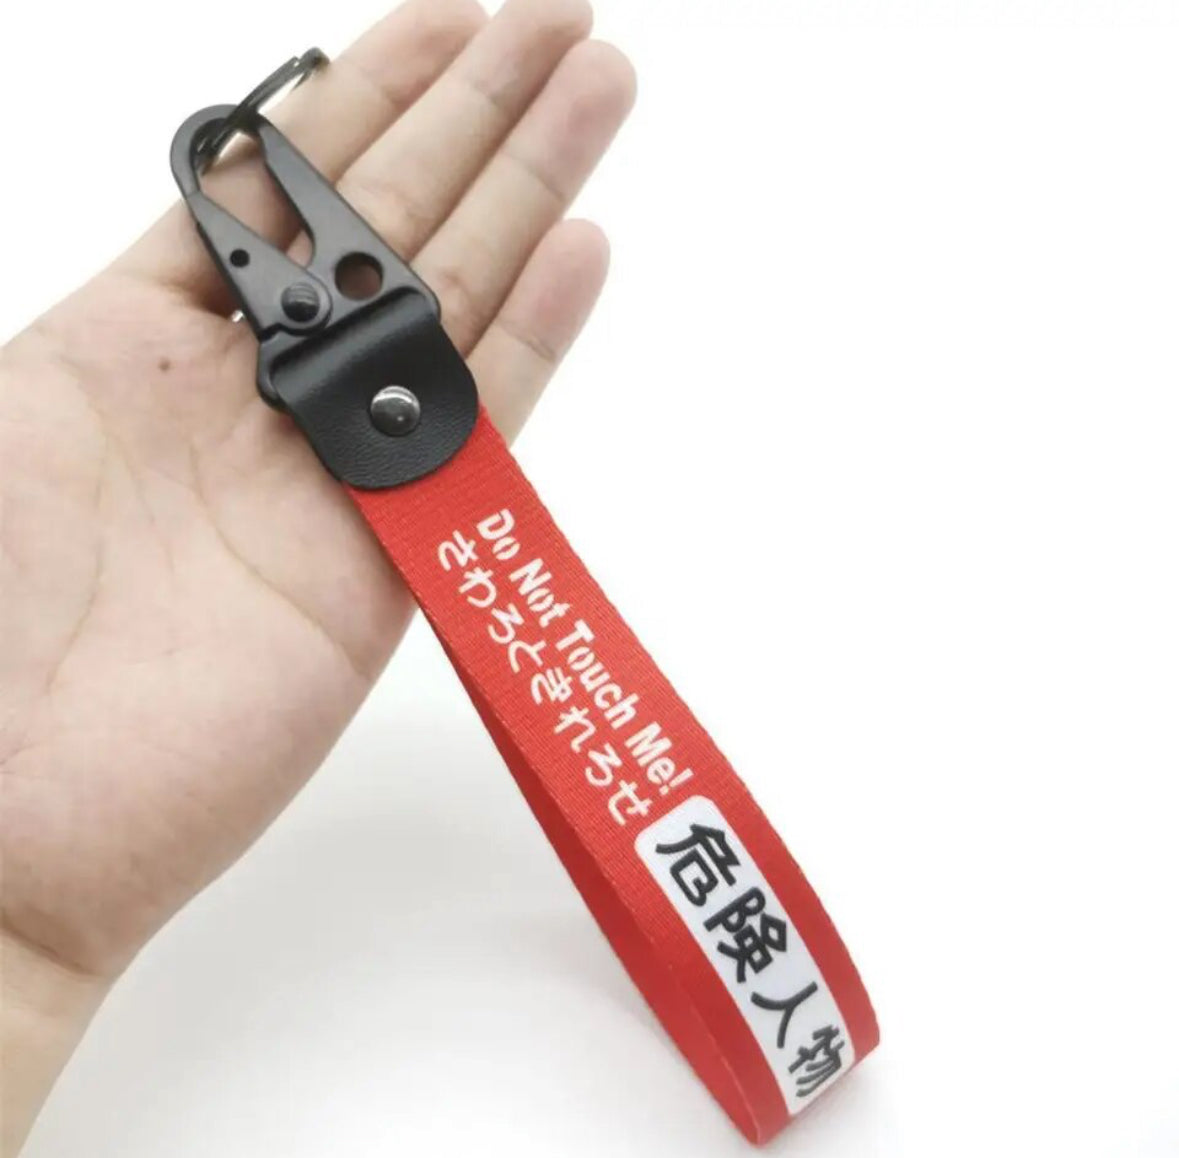 DO NOT TOUCH ME - Dangerous Person Key Chain JDM Culture Heat Transfer Wrist Strap Key Strap Car Motorcycle